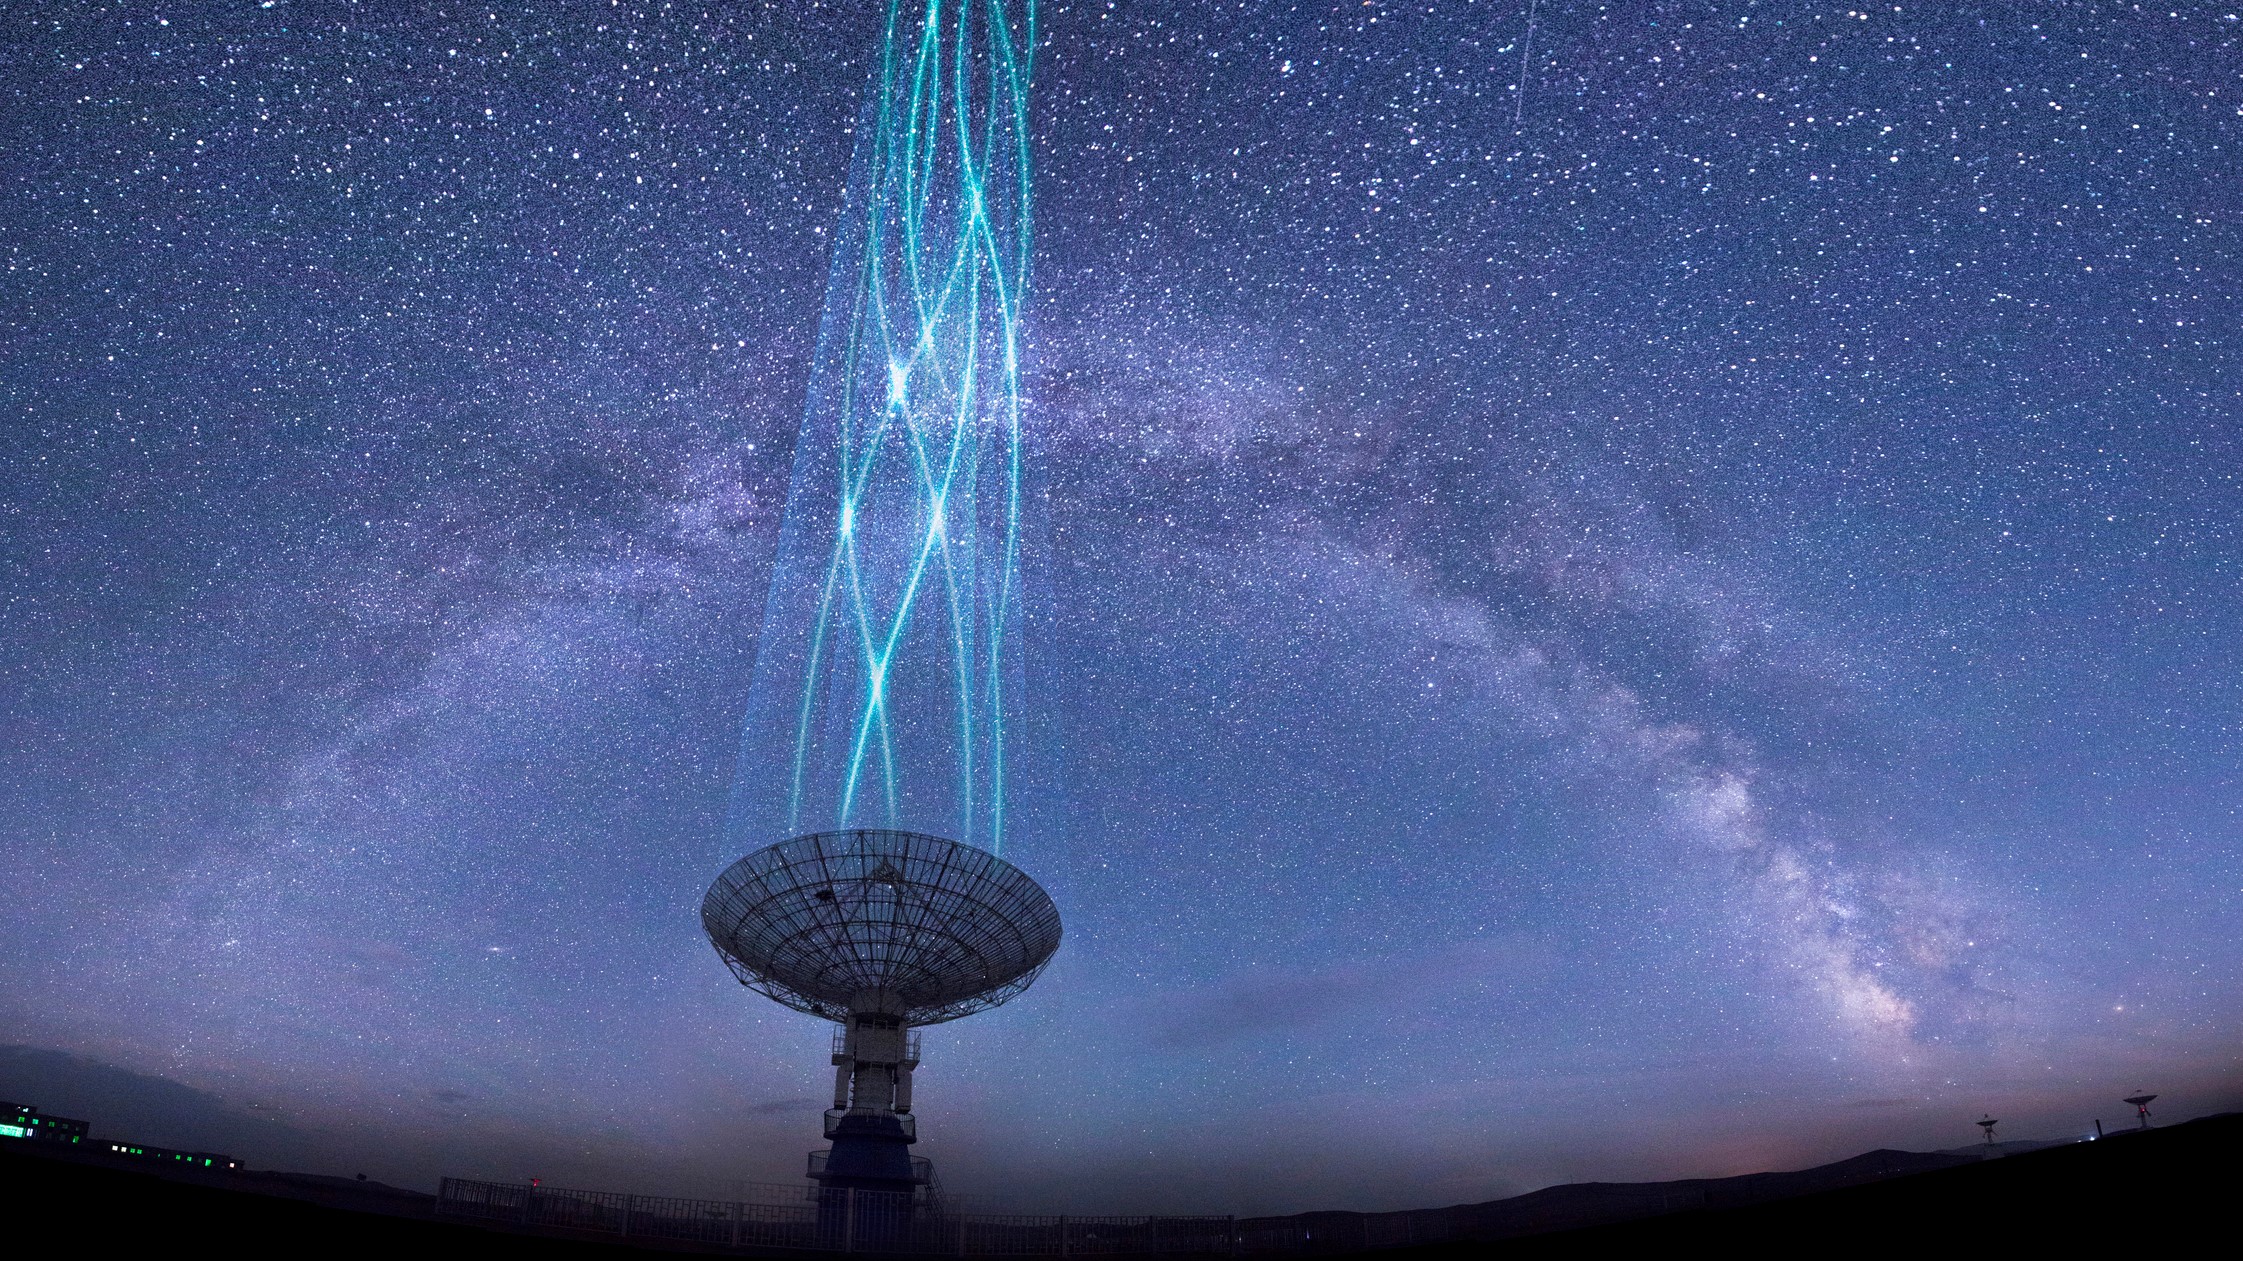 Radio telescope dish pointing at the sky. Milky way band streaks across the sky above.